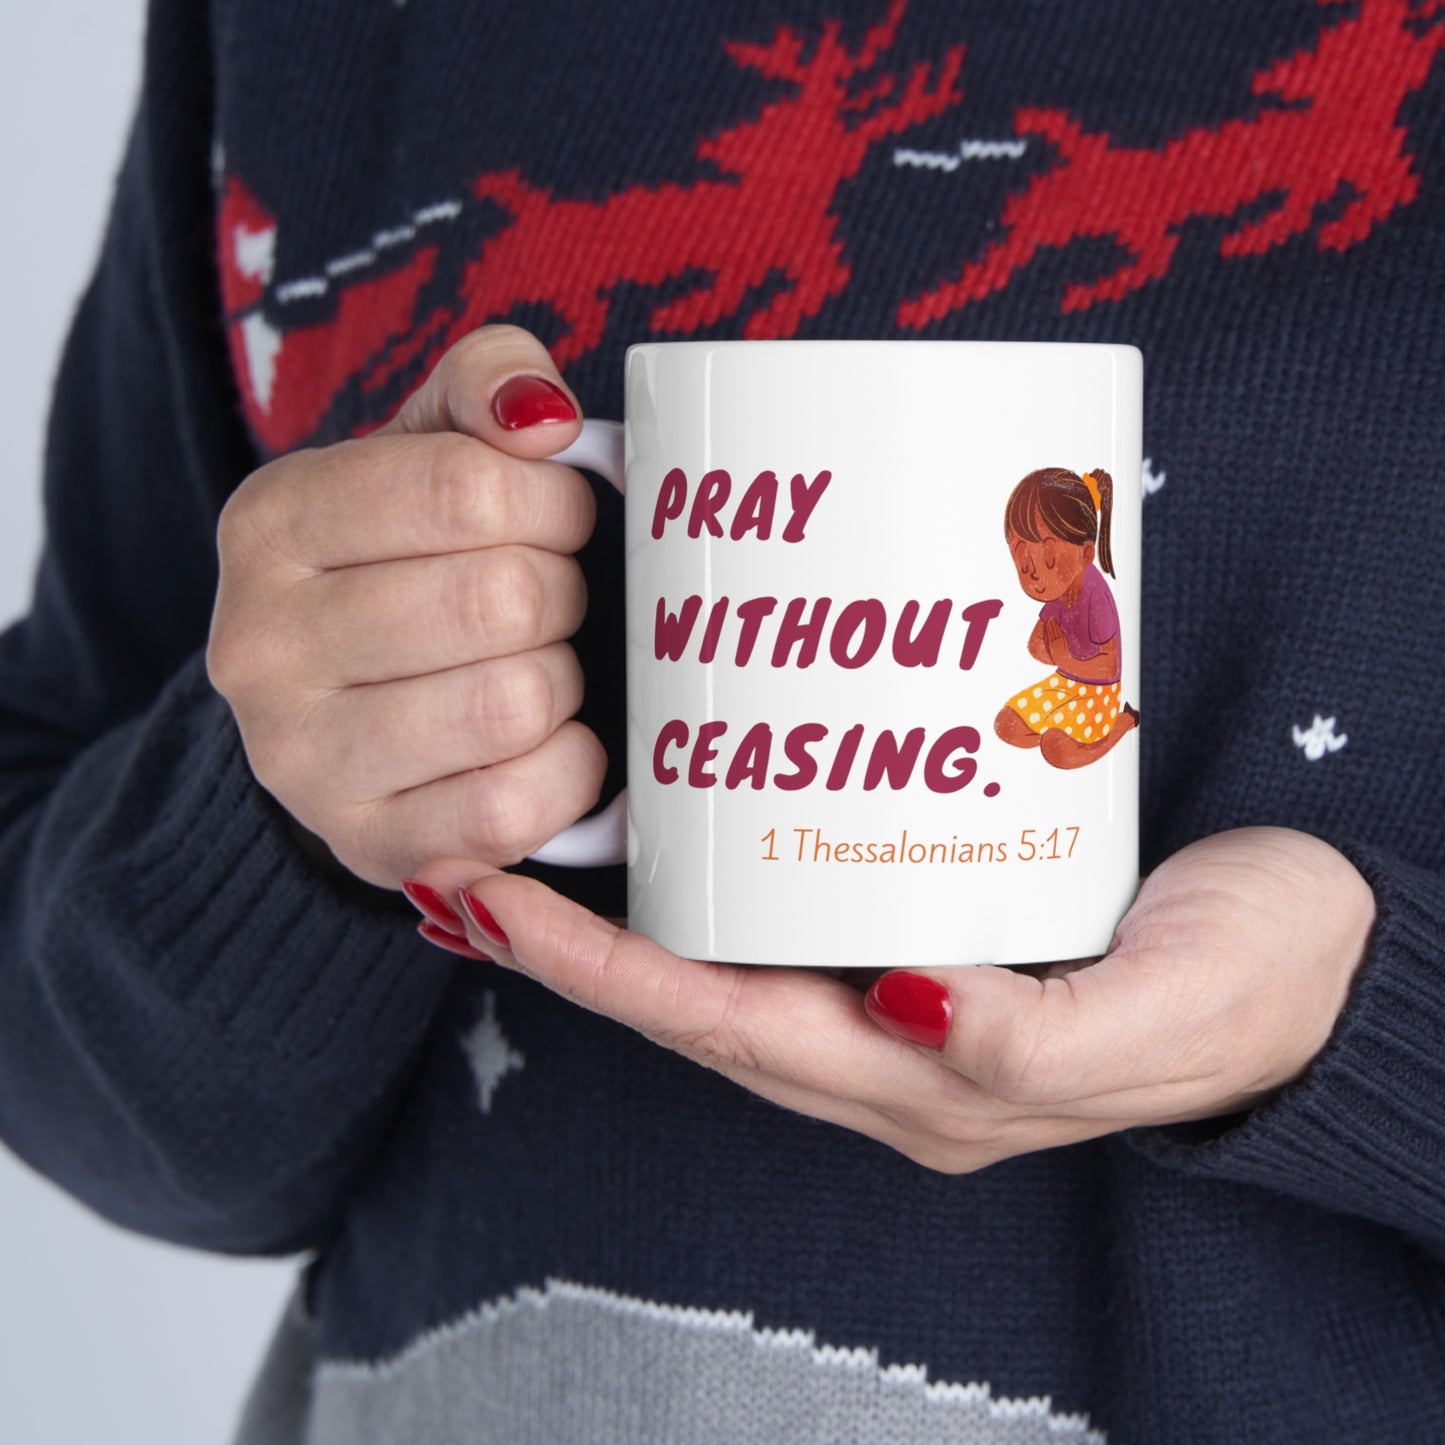 Christian Mug Pray Without Ceasing White Ceramic 11oz Mug